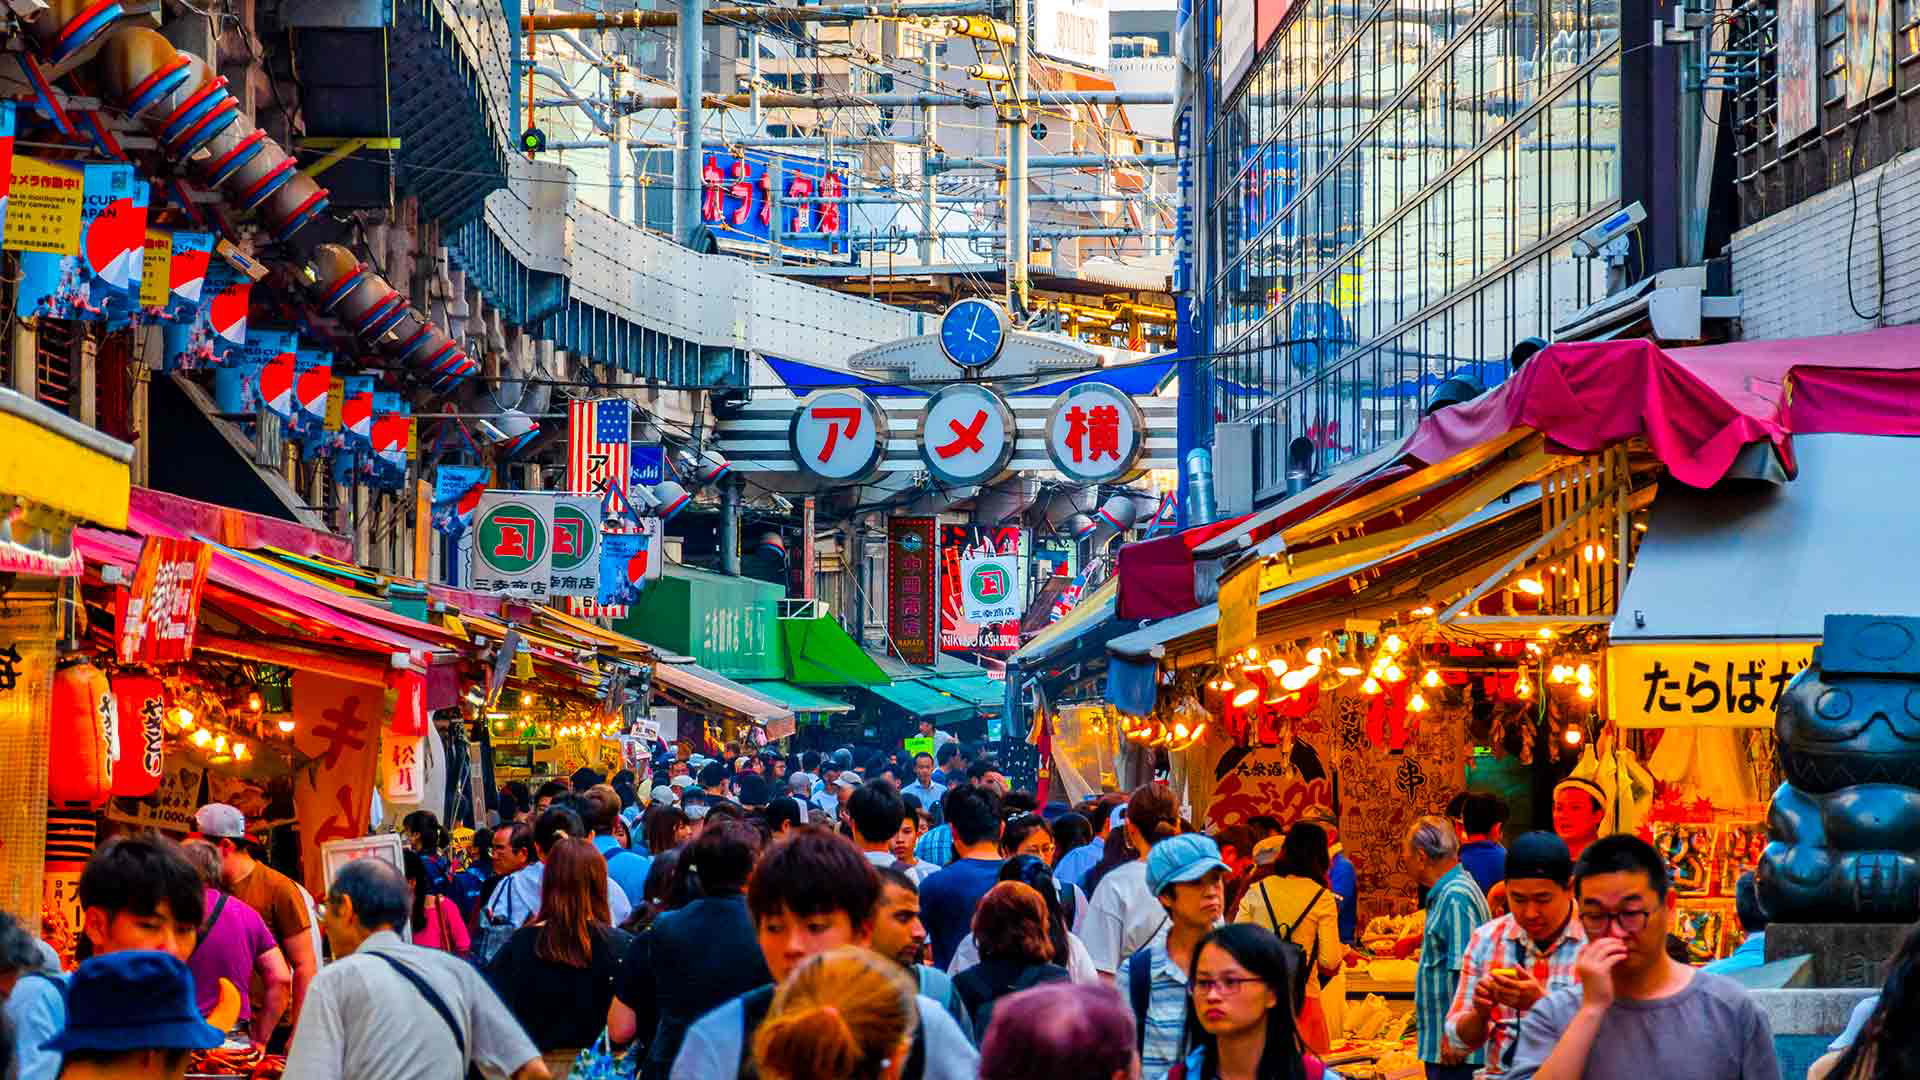 6 Japanese Street Foods To Try At Ameya Yokocho Market